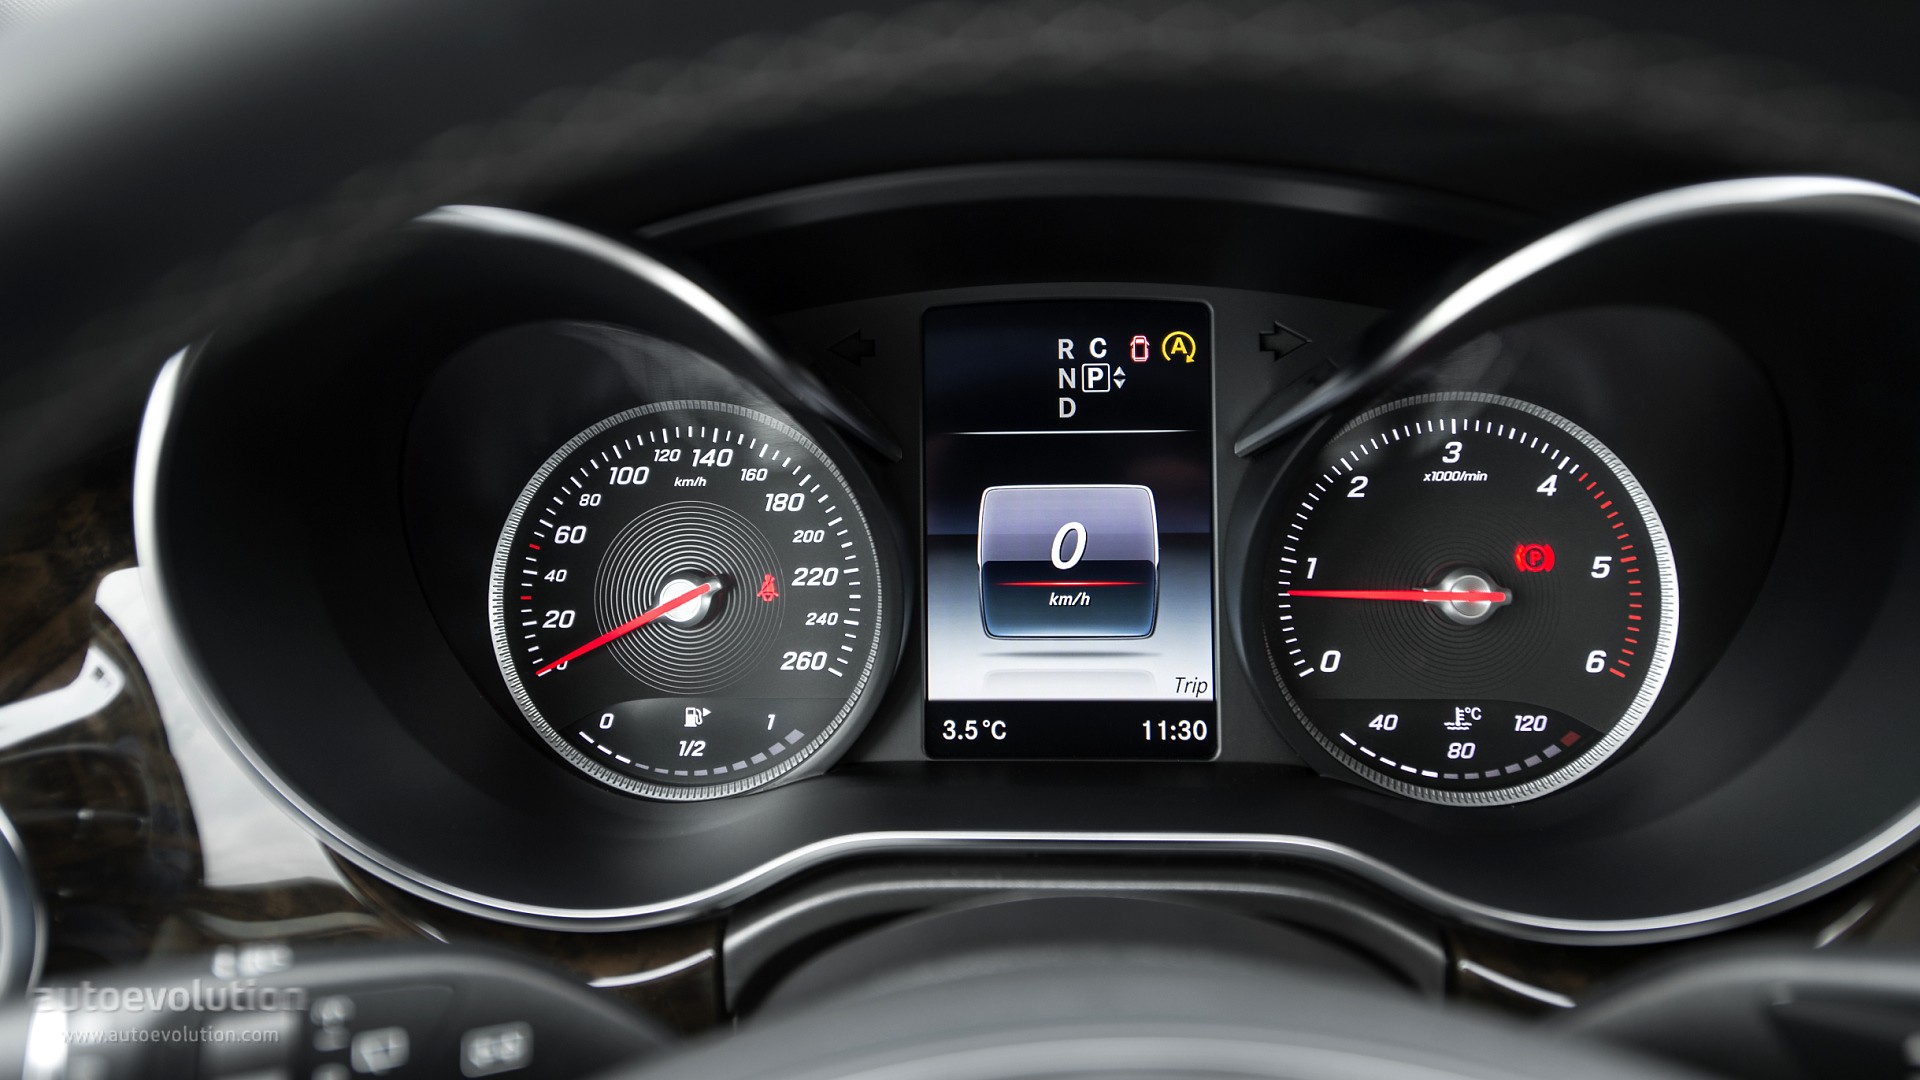 2015 Mercedes V-Class first test drive review - Autogefühl